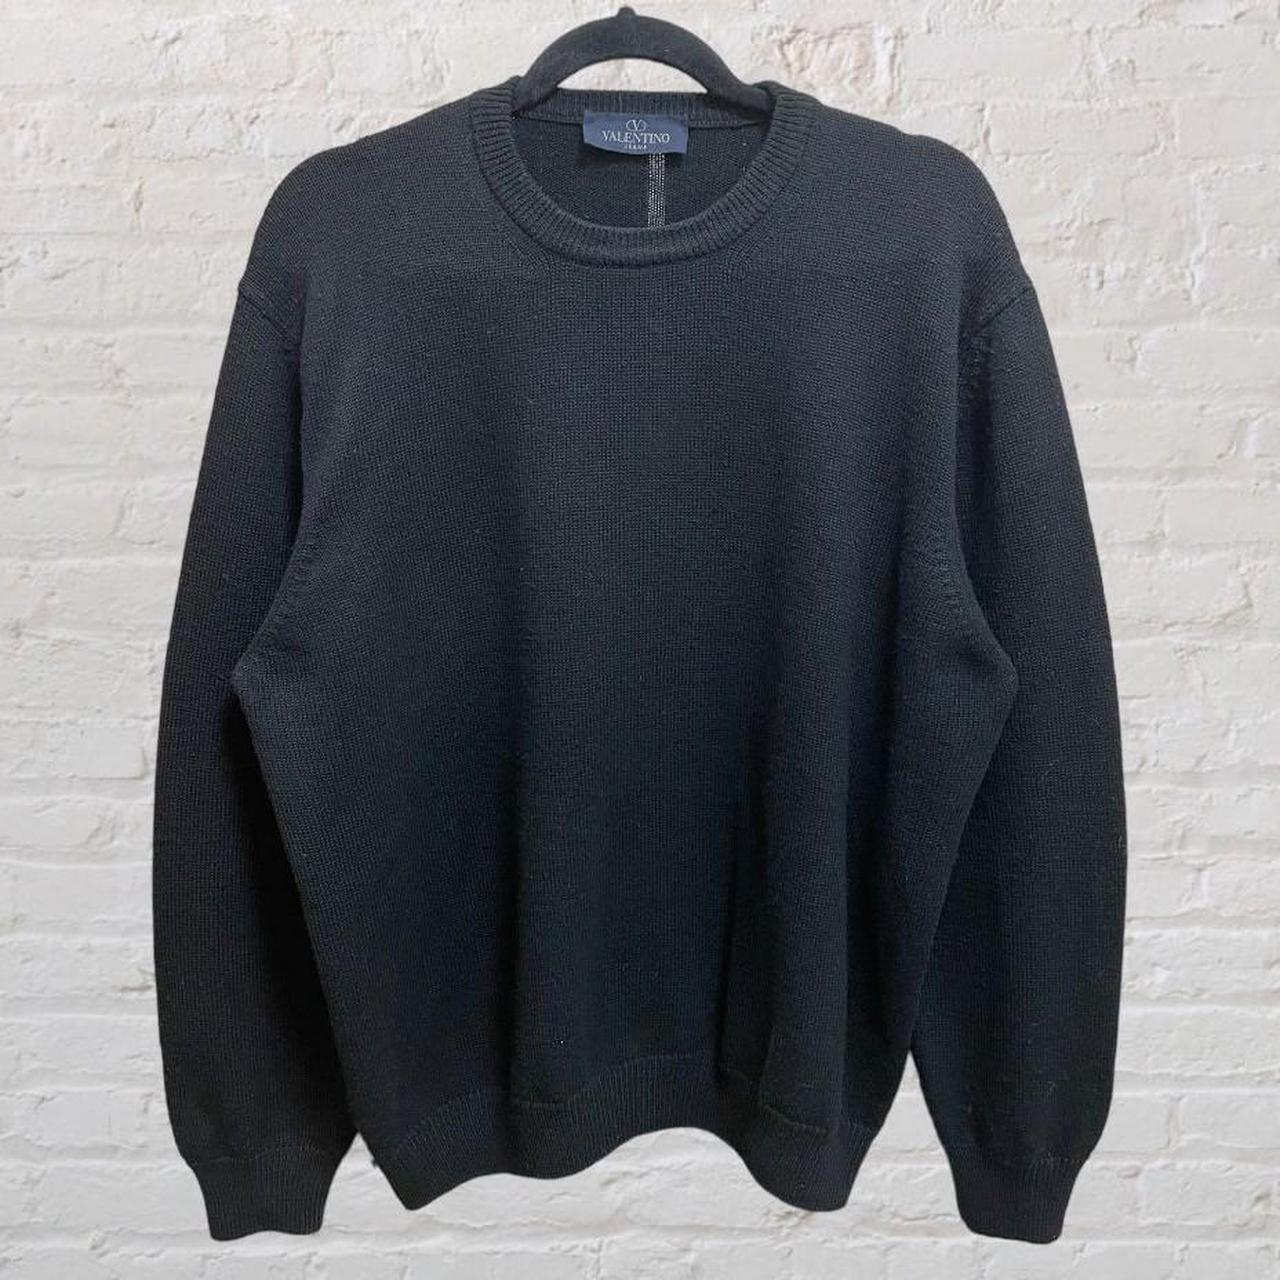 Valentino Men's Black Knitted Sweater. 50% Virgin... - Depop